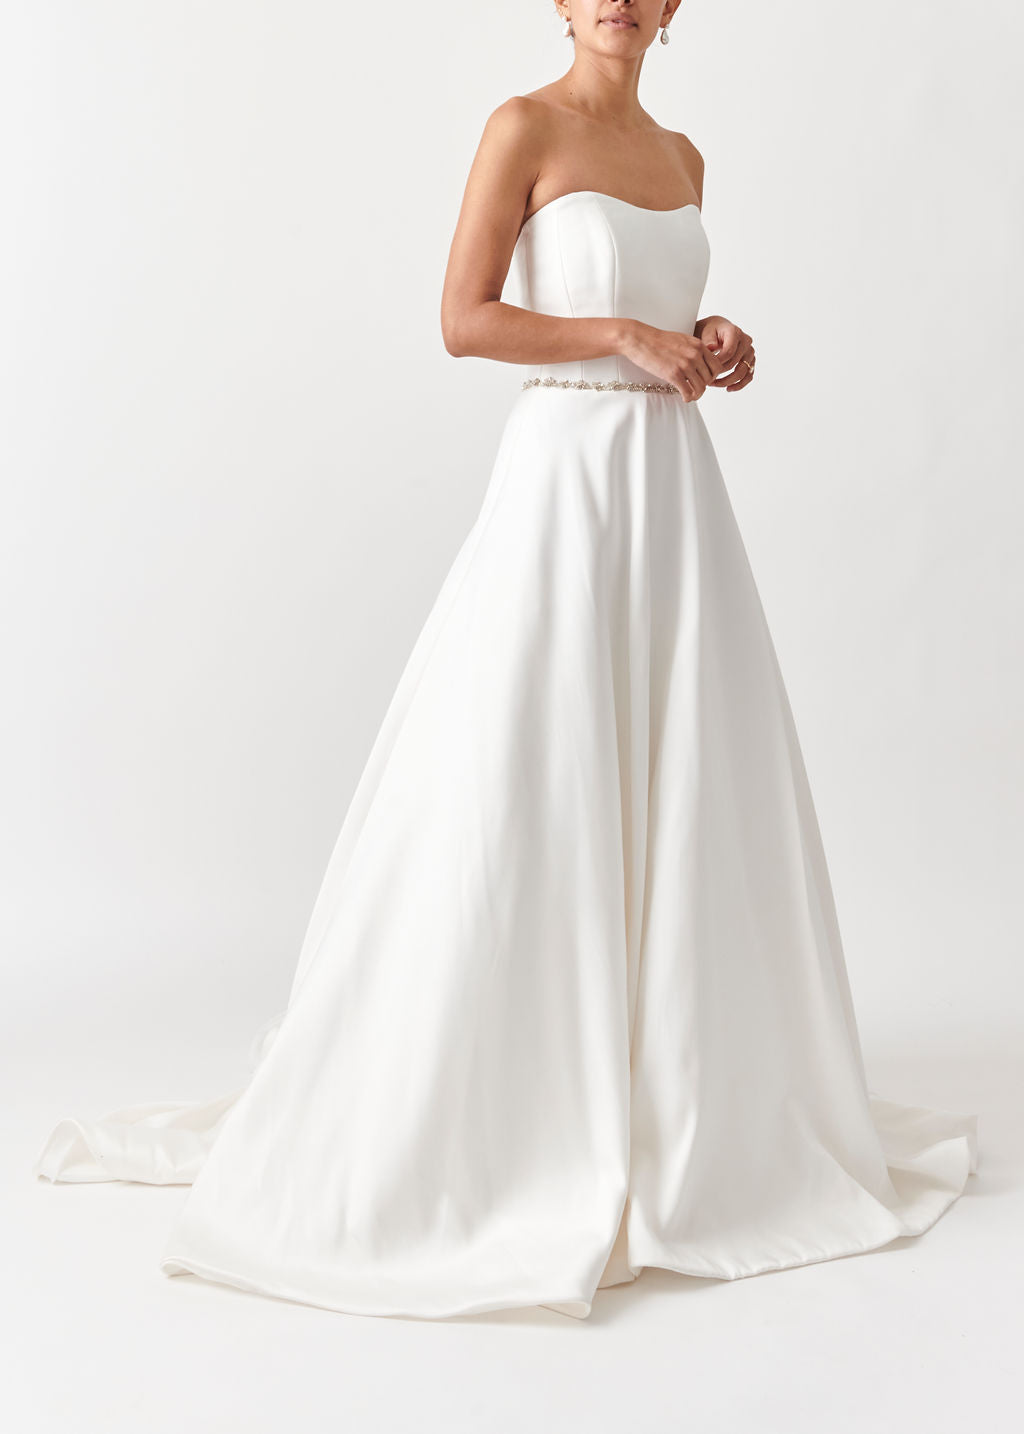 The Alan Hannah strapless wedding dress defines elegance